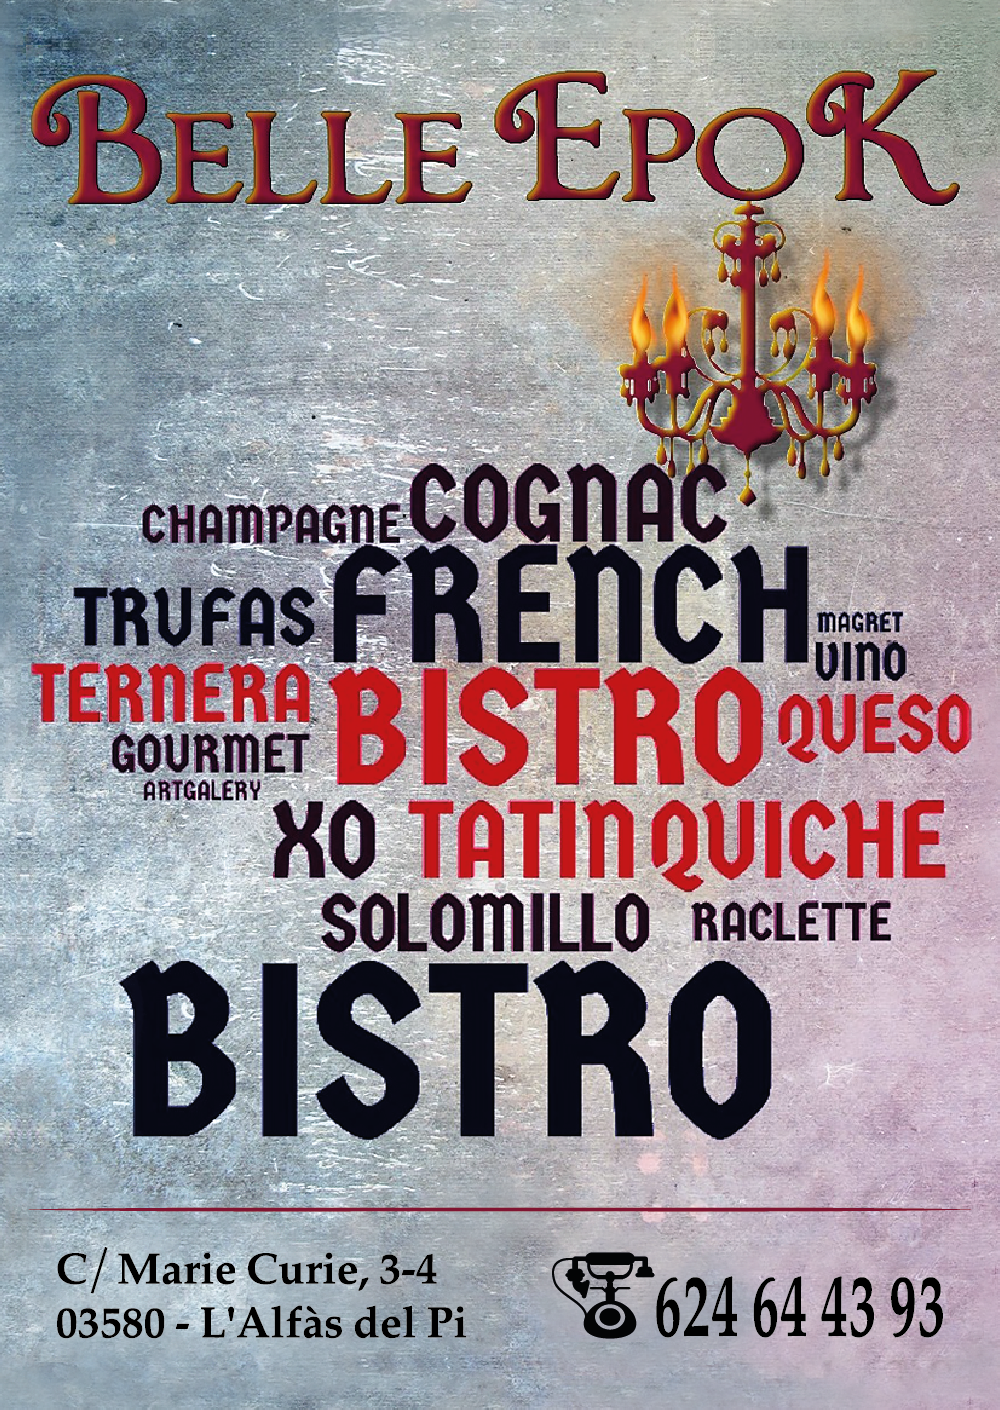 Bistro Belle Epok, Fransk Restaurant i Alfaz